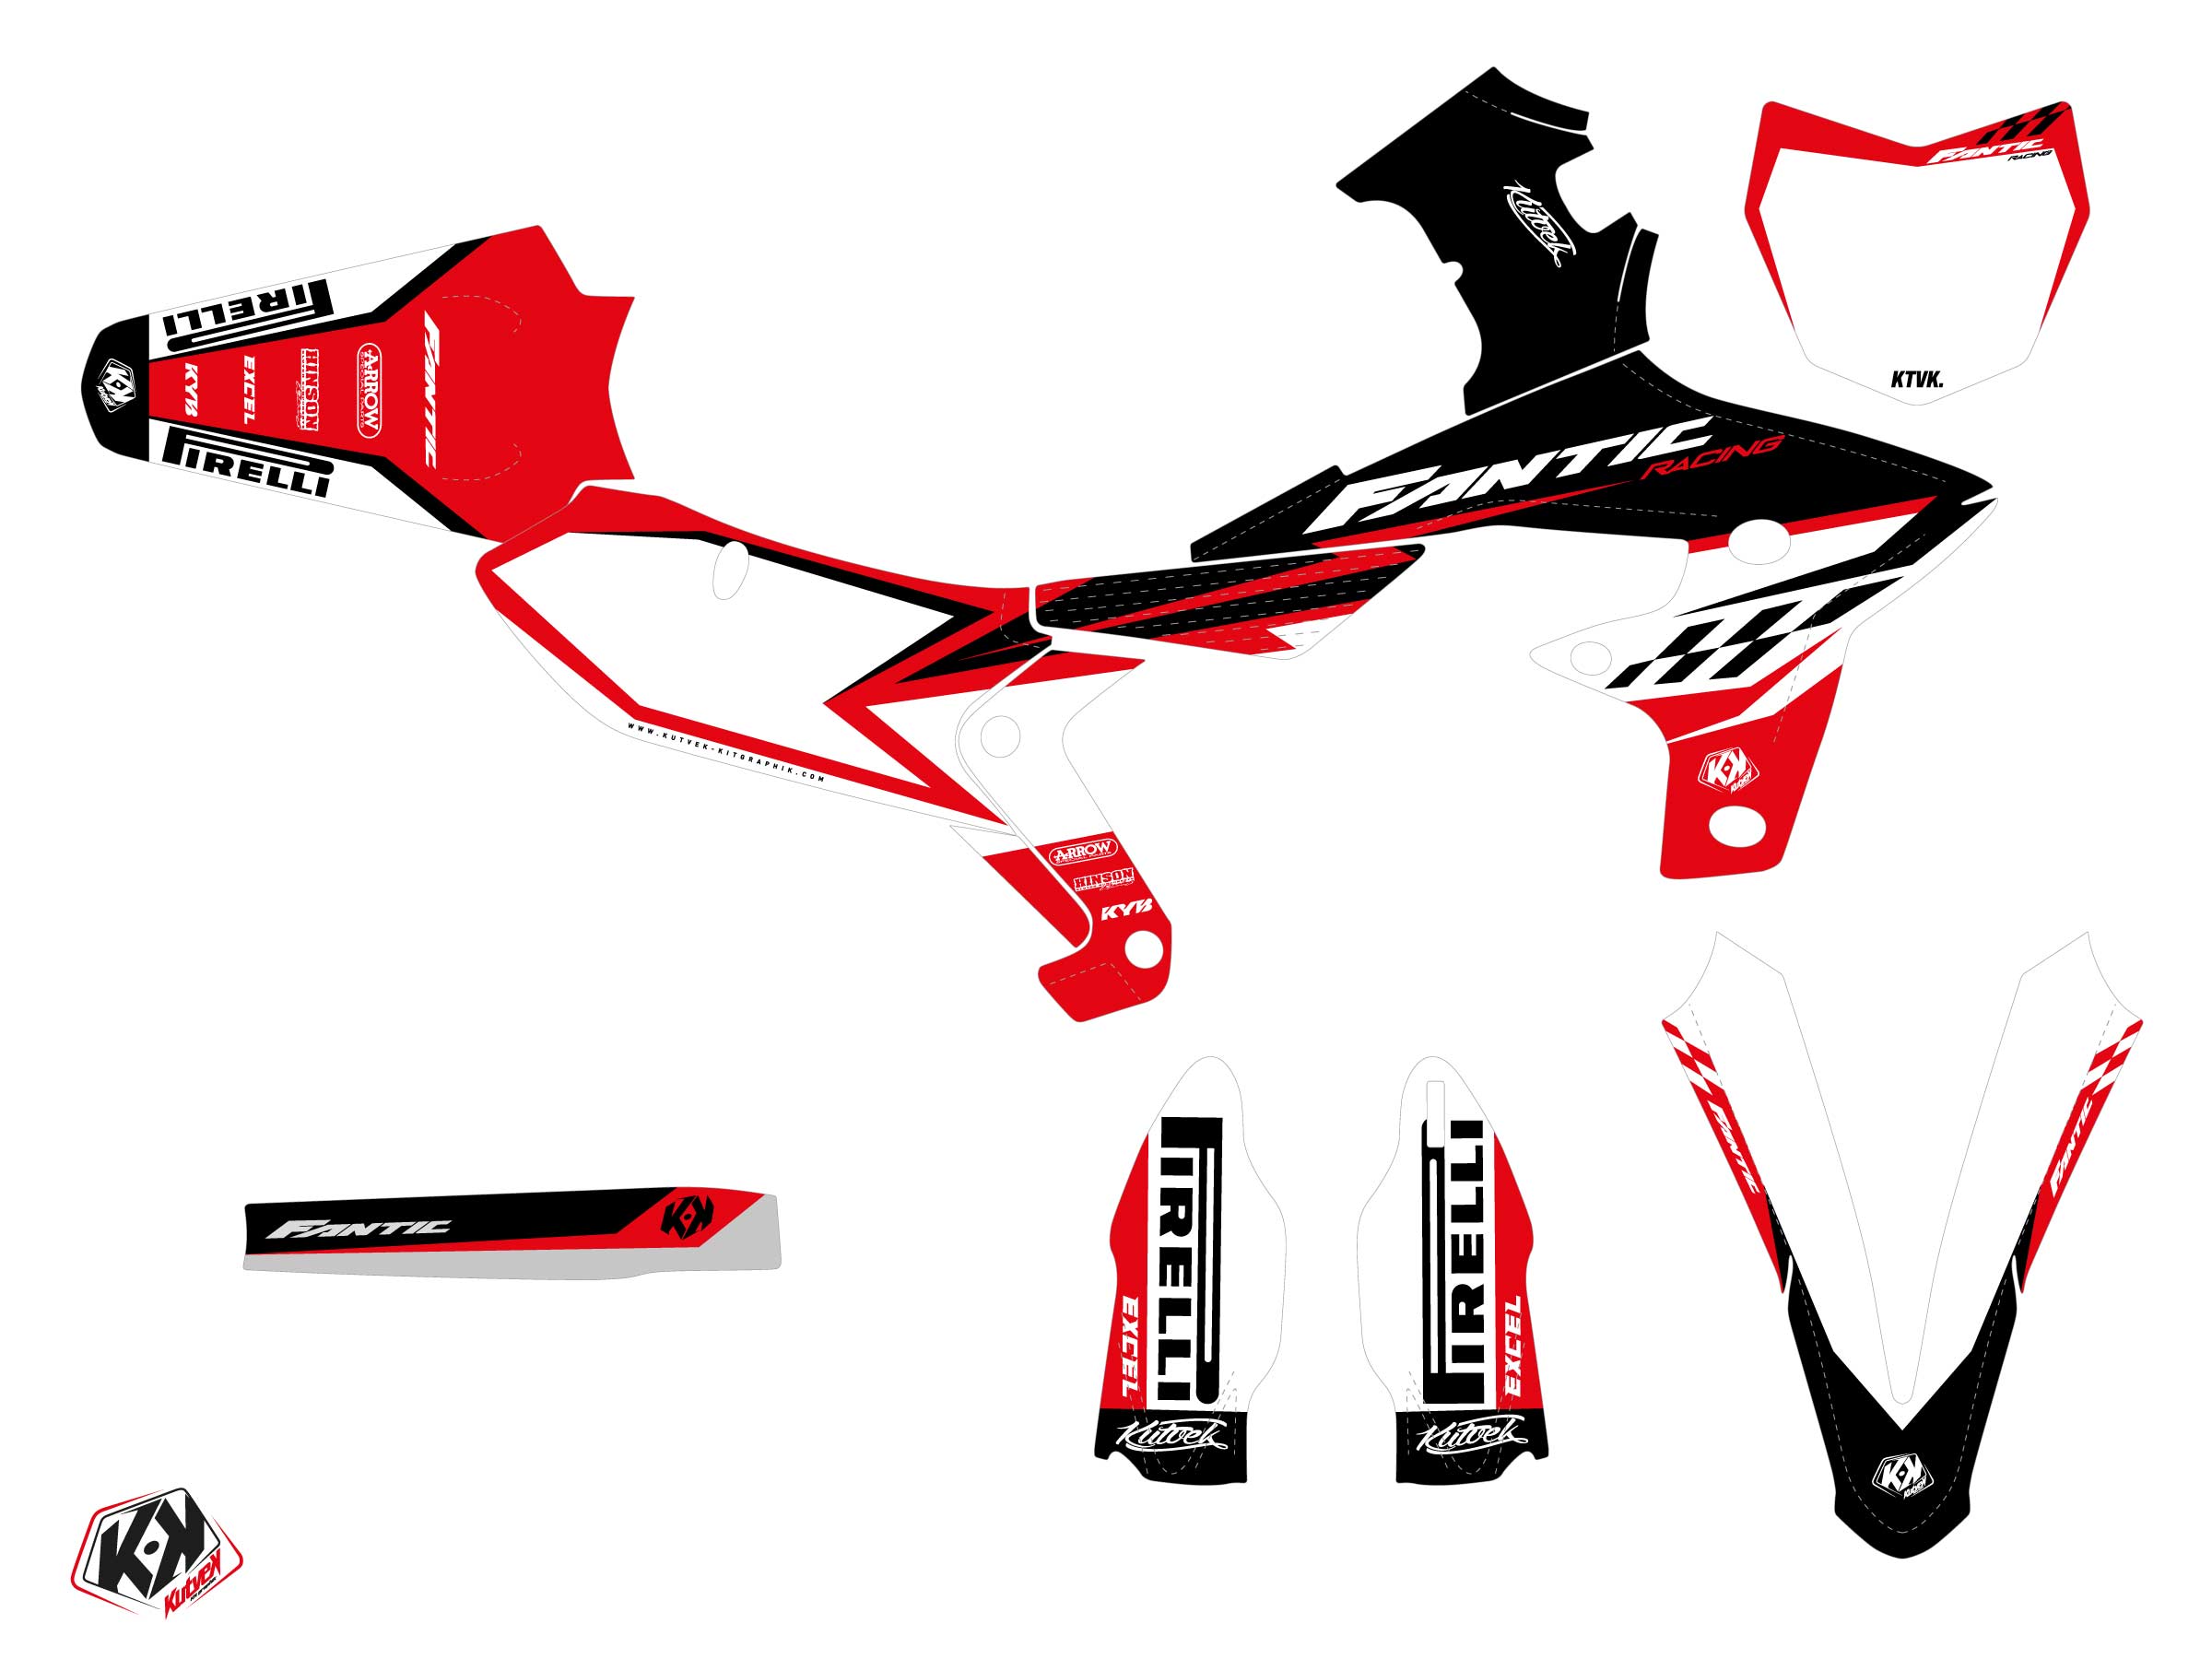 Fantic Xx 450 F Dirt Bike Inkline Graphic Kit Red